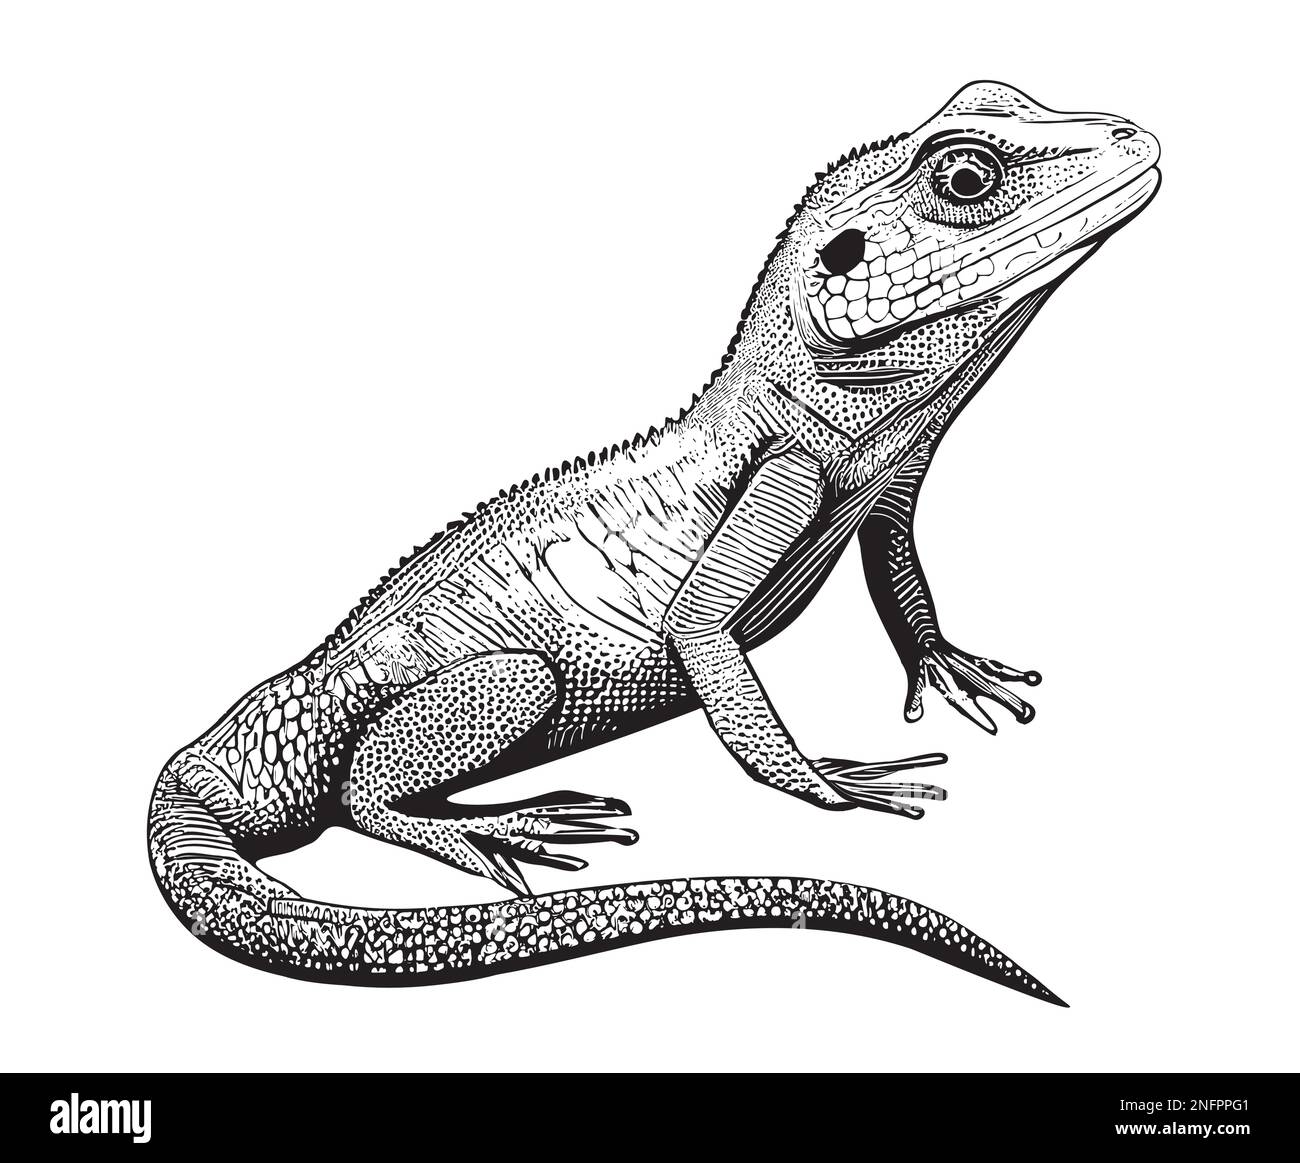 Lizard hand drawn sketch Vector illustration Animal Reptile Stock Vector